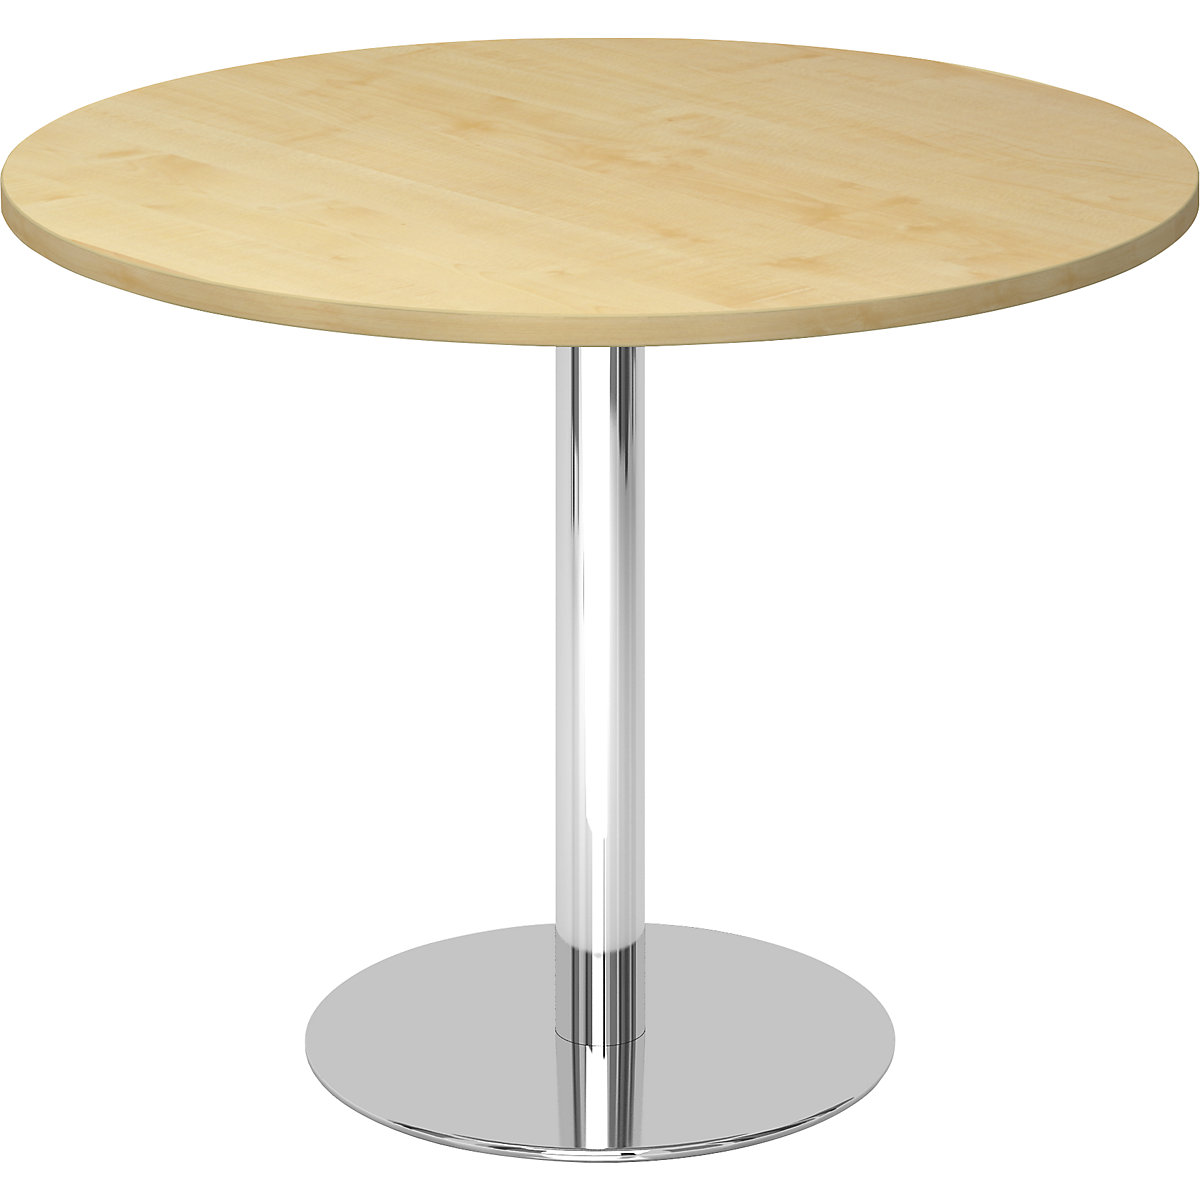 Konferencijski stol, Ø 1000 mm, visina 755 mm, kromirano postolje, ploča u imitaciji javora-3